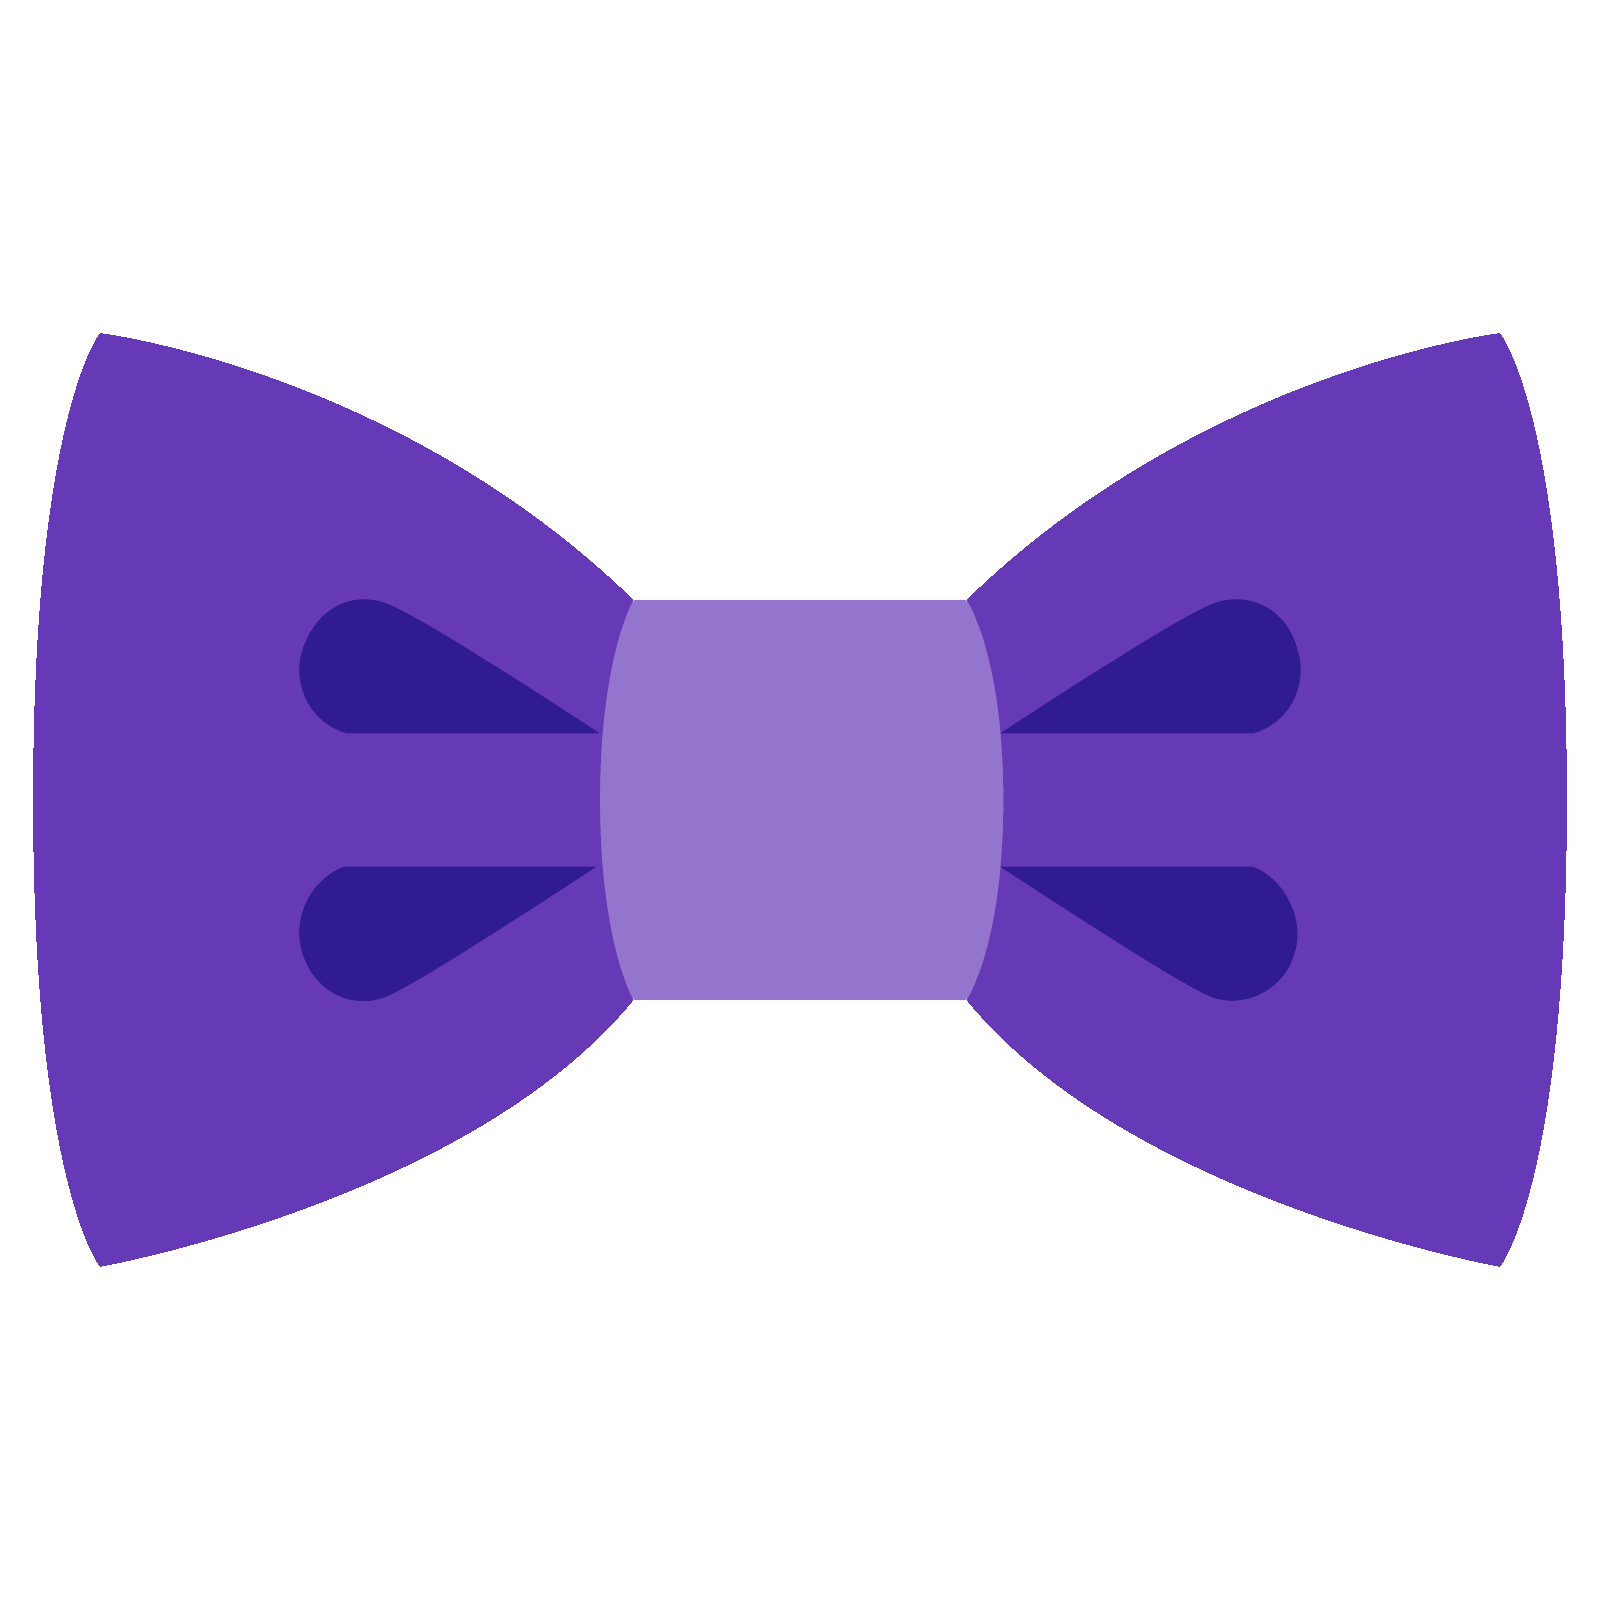 Bow tie Necktie Icon - Tie png download - 1102*979 - Free 